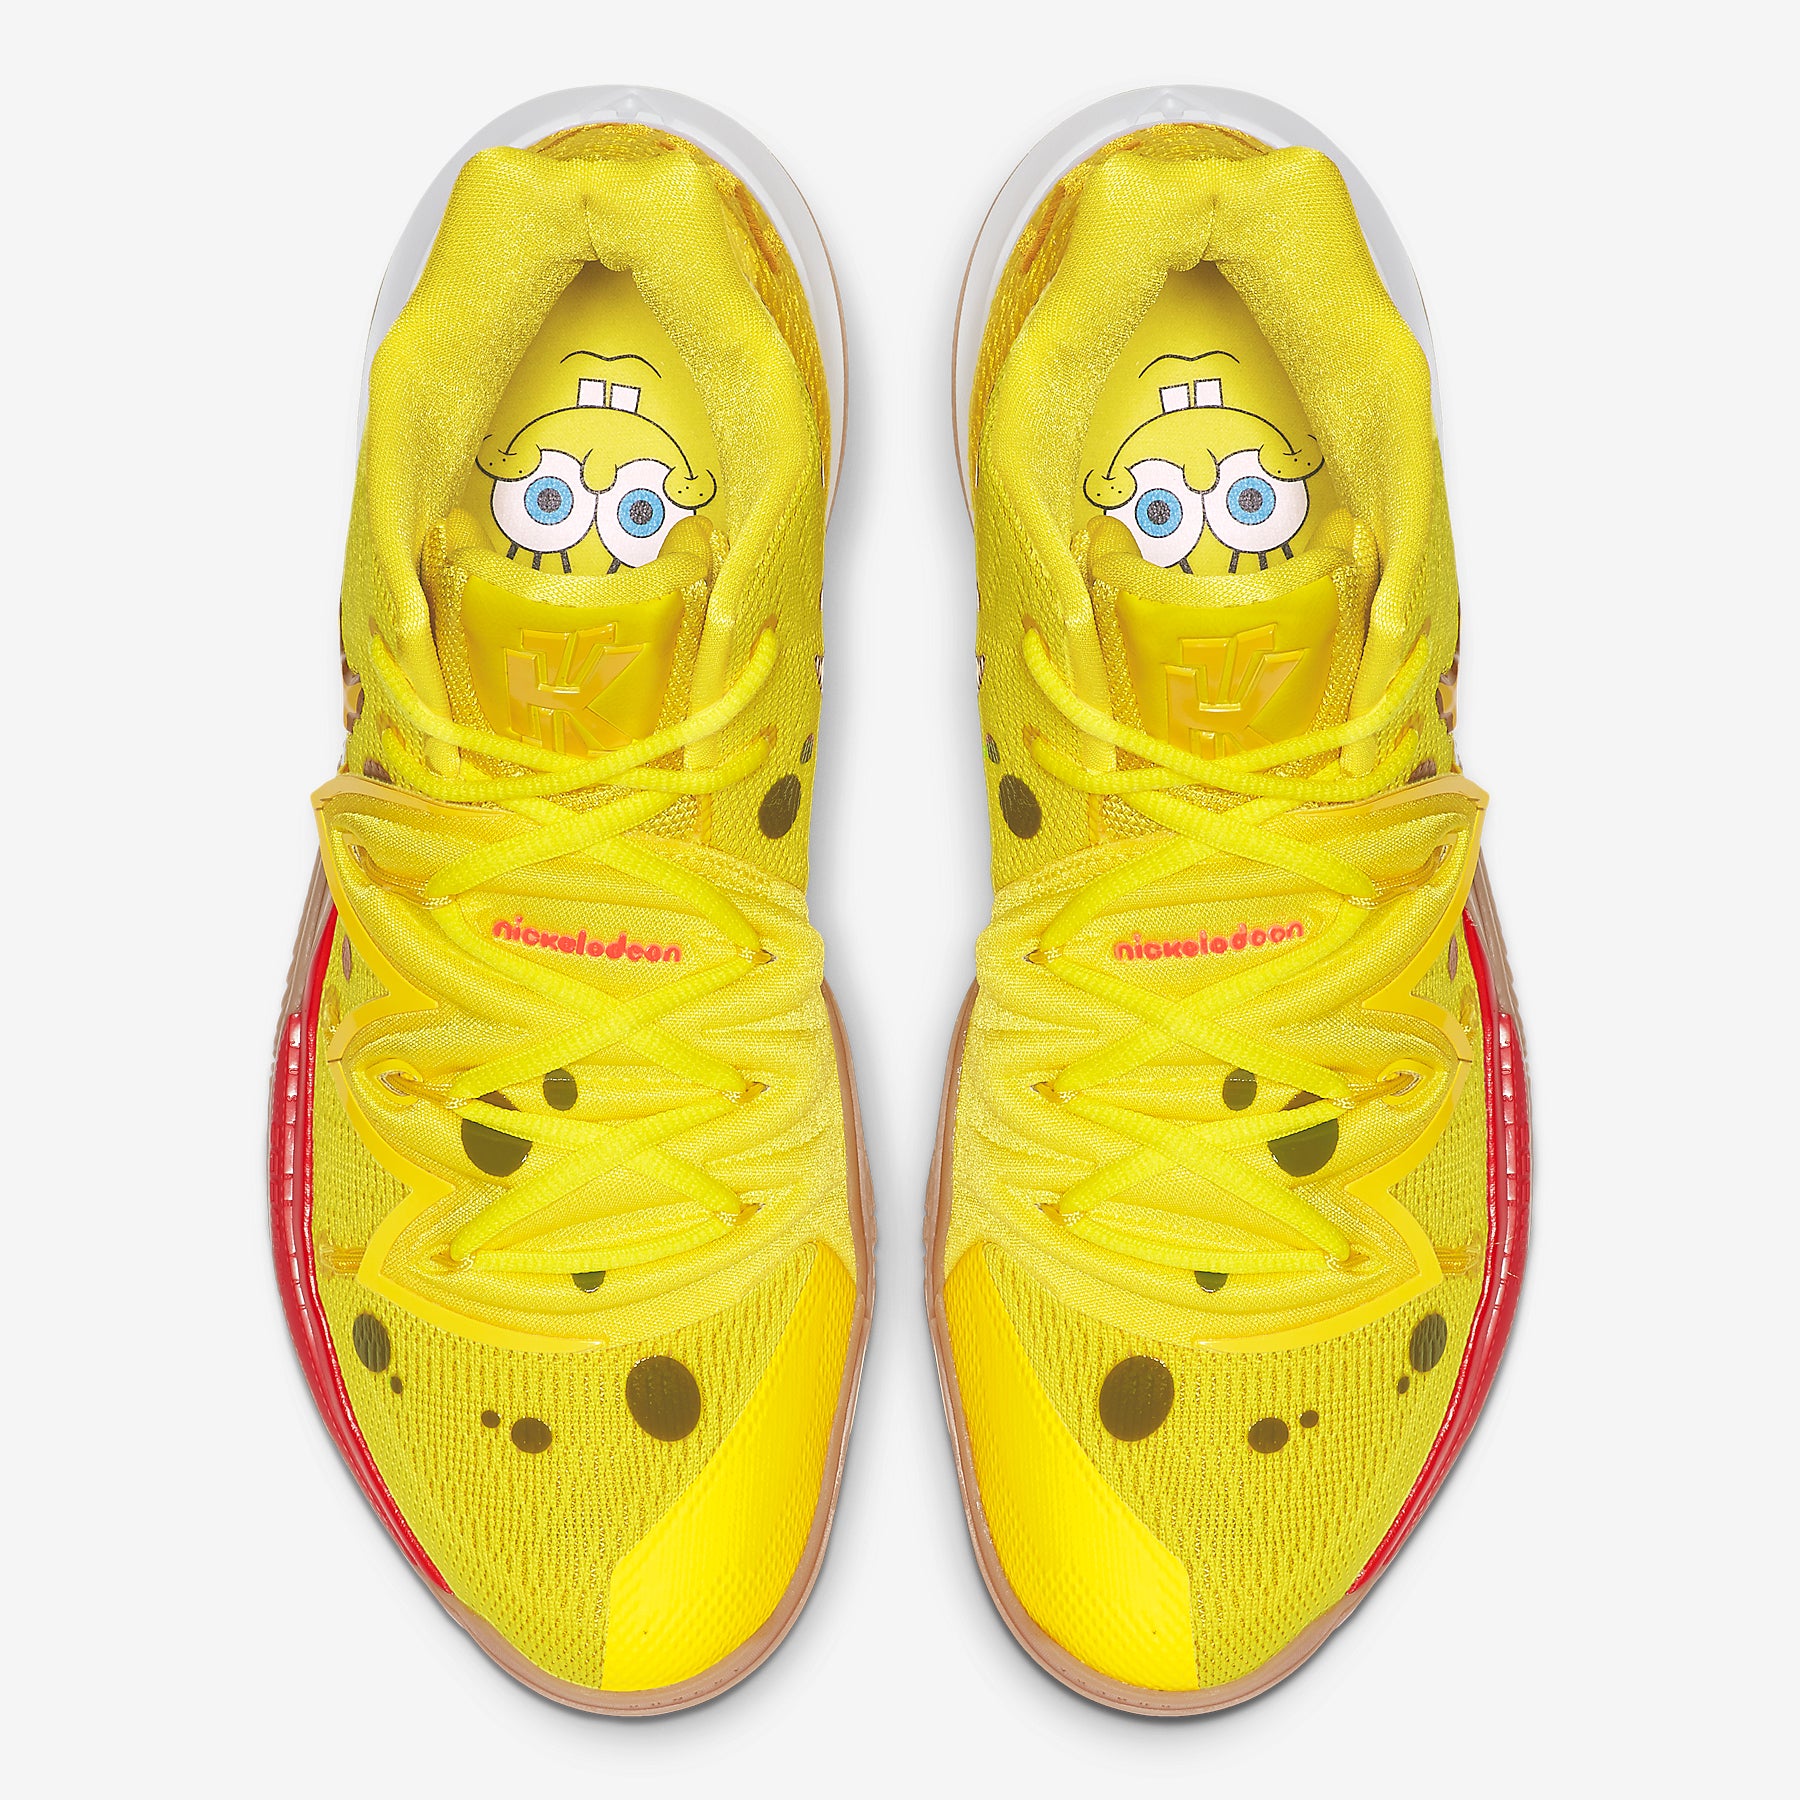 Nike Kyrie 5 Spongebob Squarepants